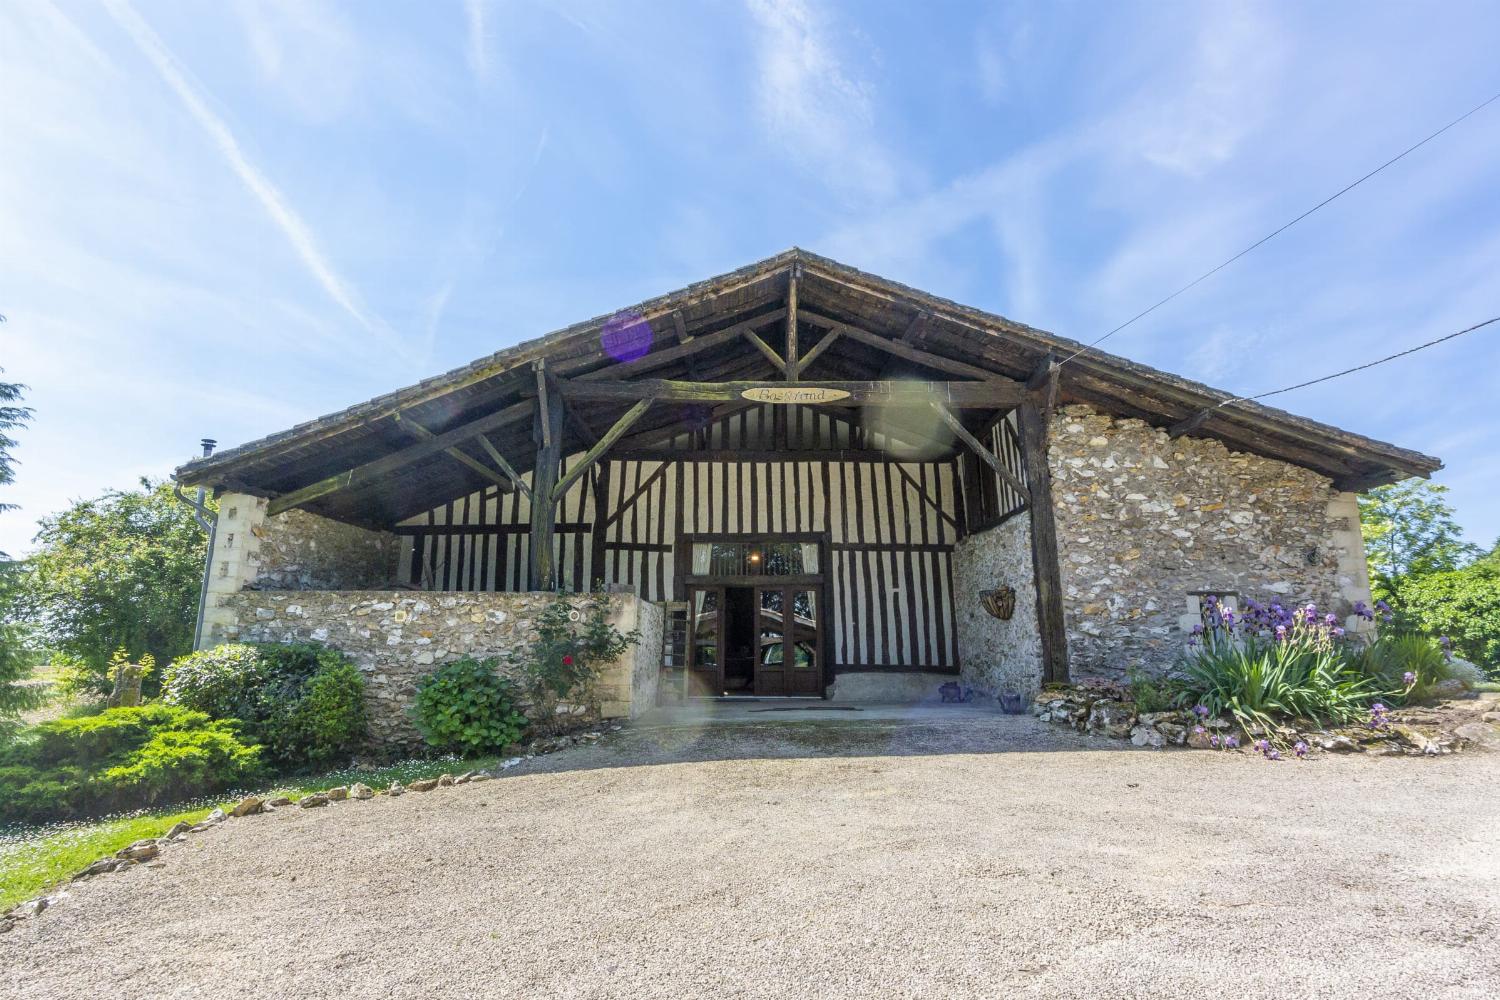 Holiday accommodation in Dordogne